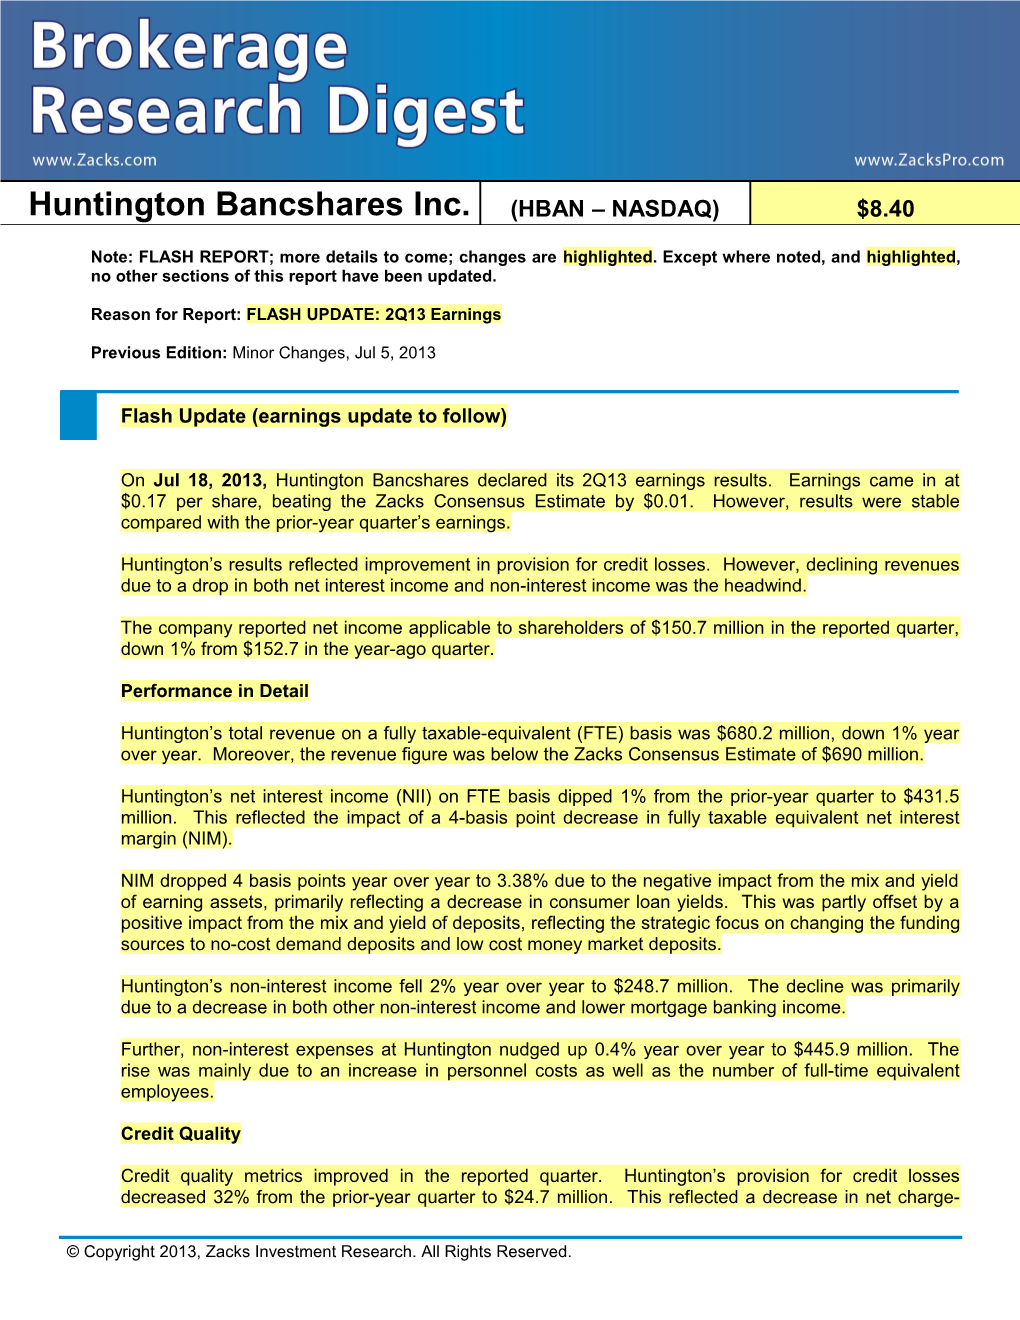 Huntington Bancshares Inc